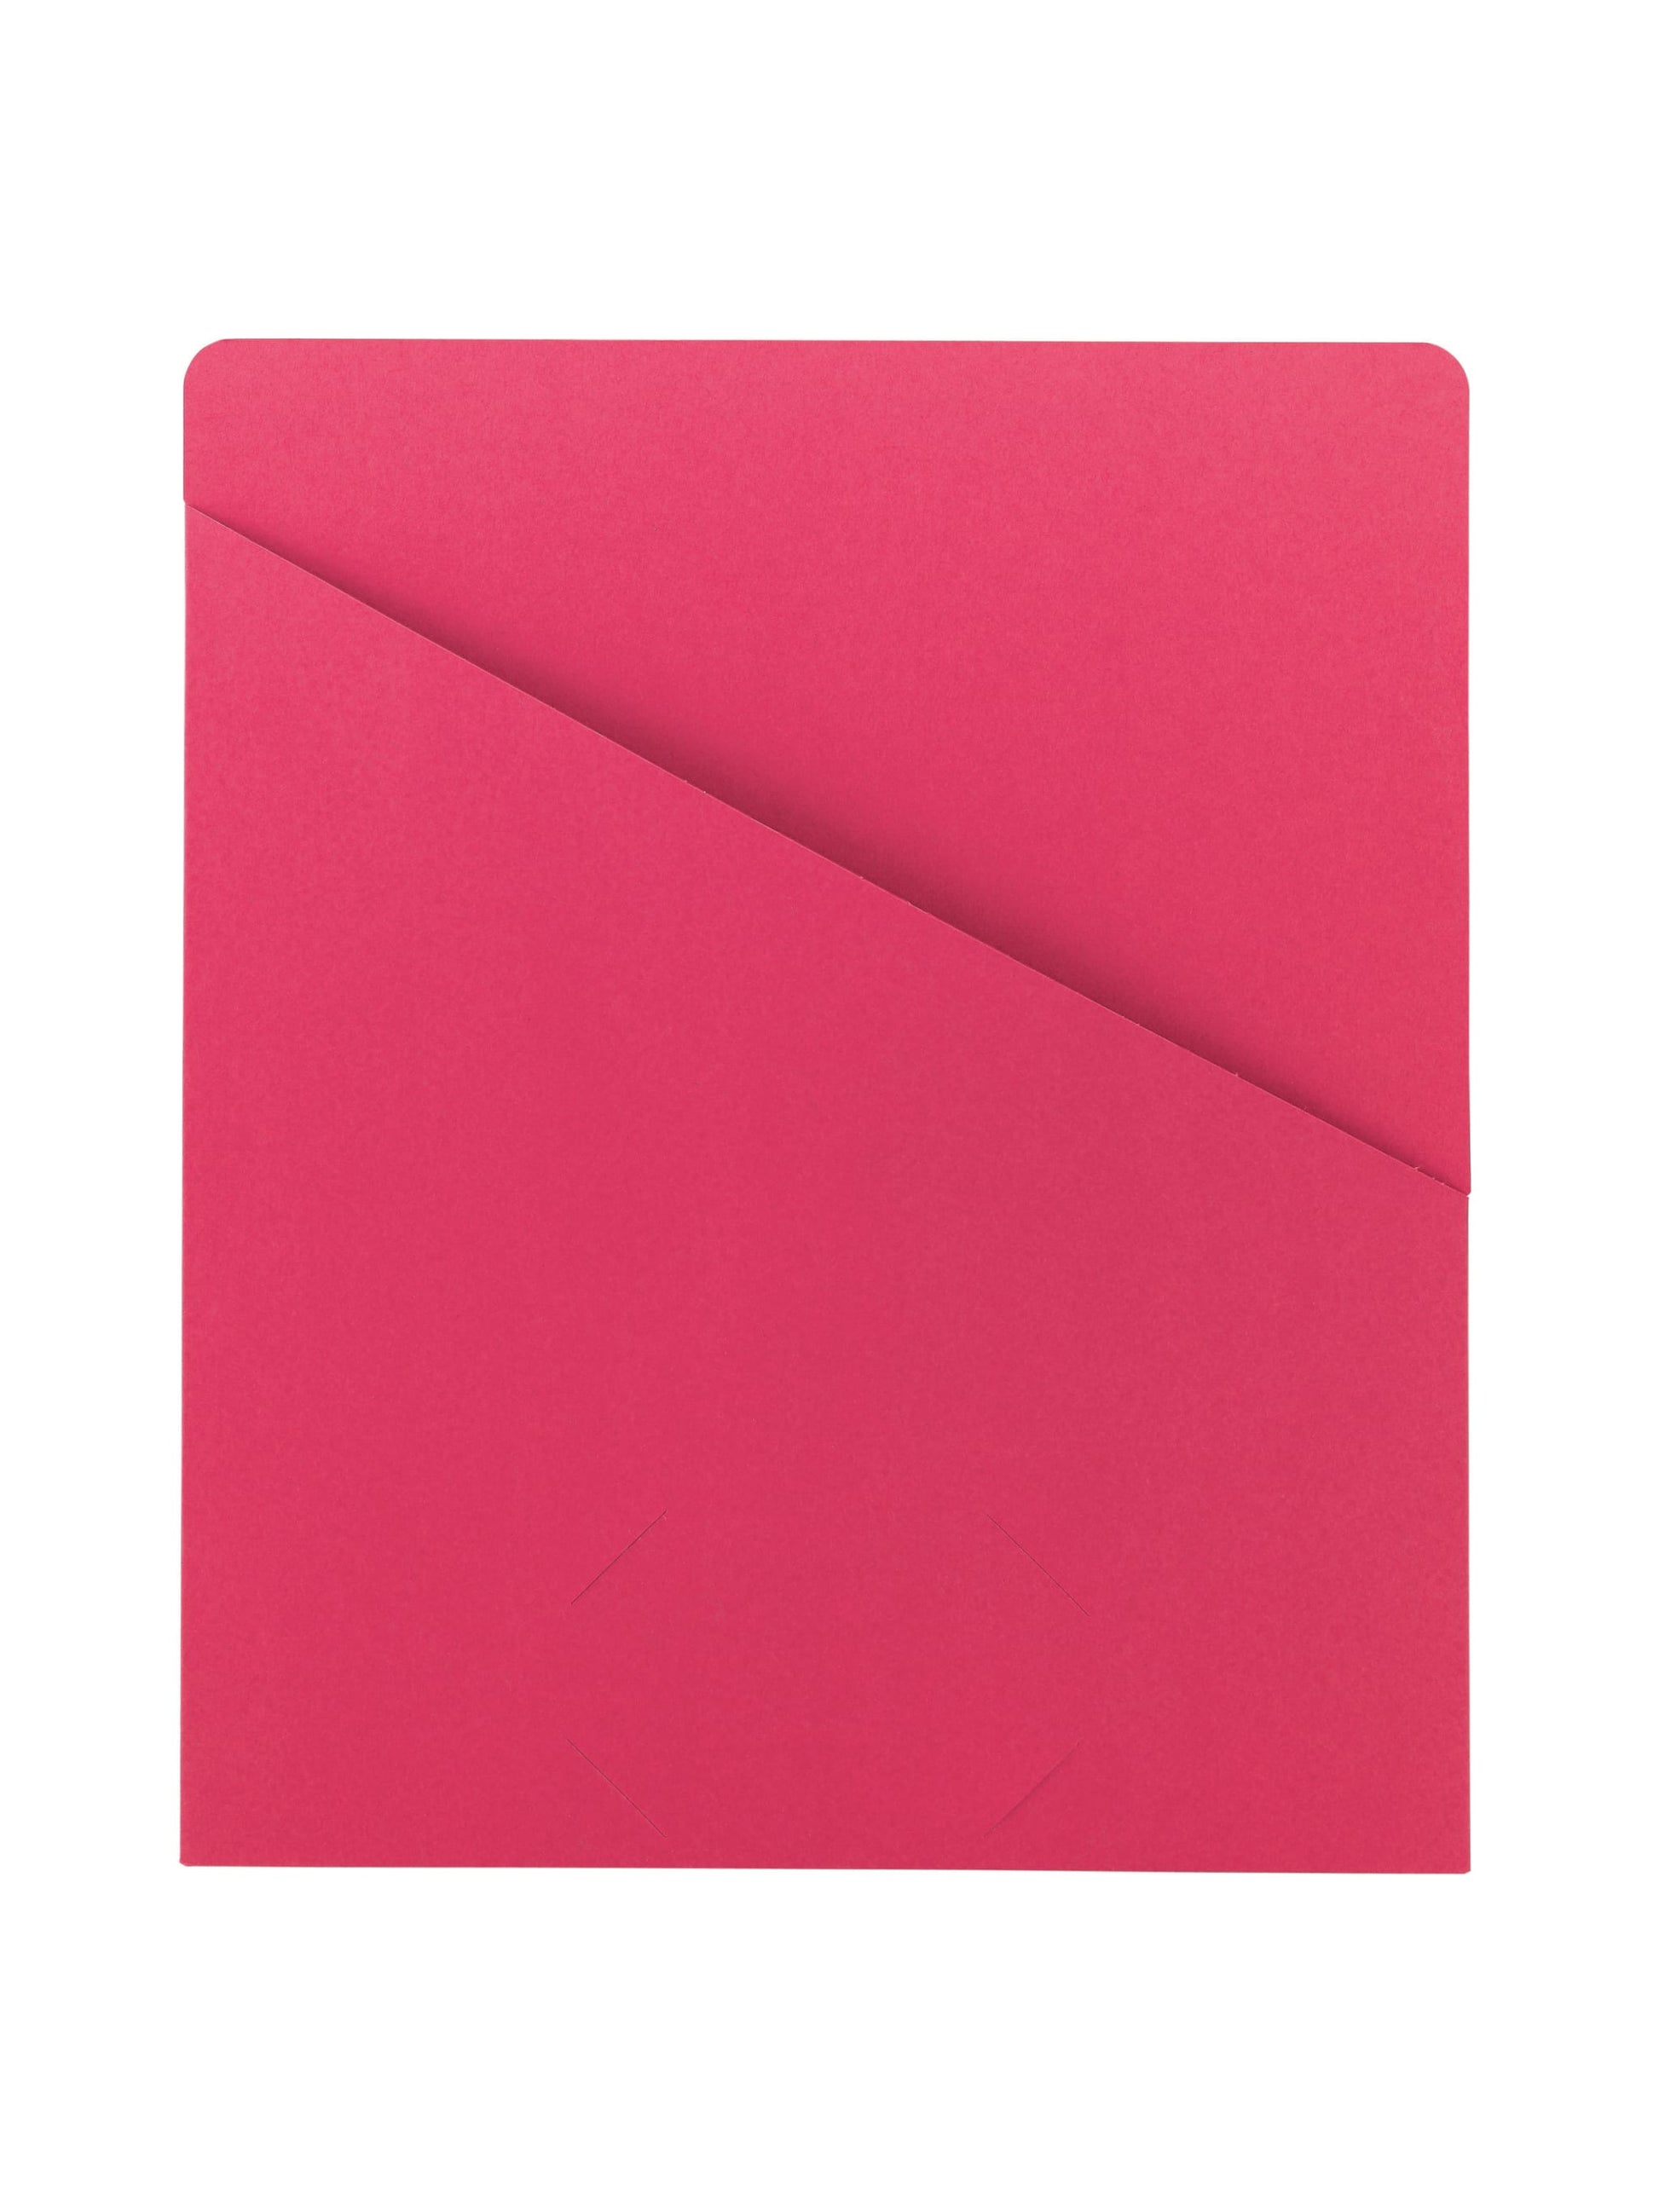 Organized Up® Slash Jackets, Flat-No Expansion, Red Color, Letter Size, Set of 1, 086486754330